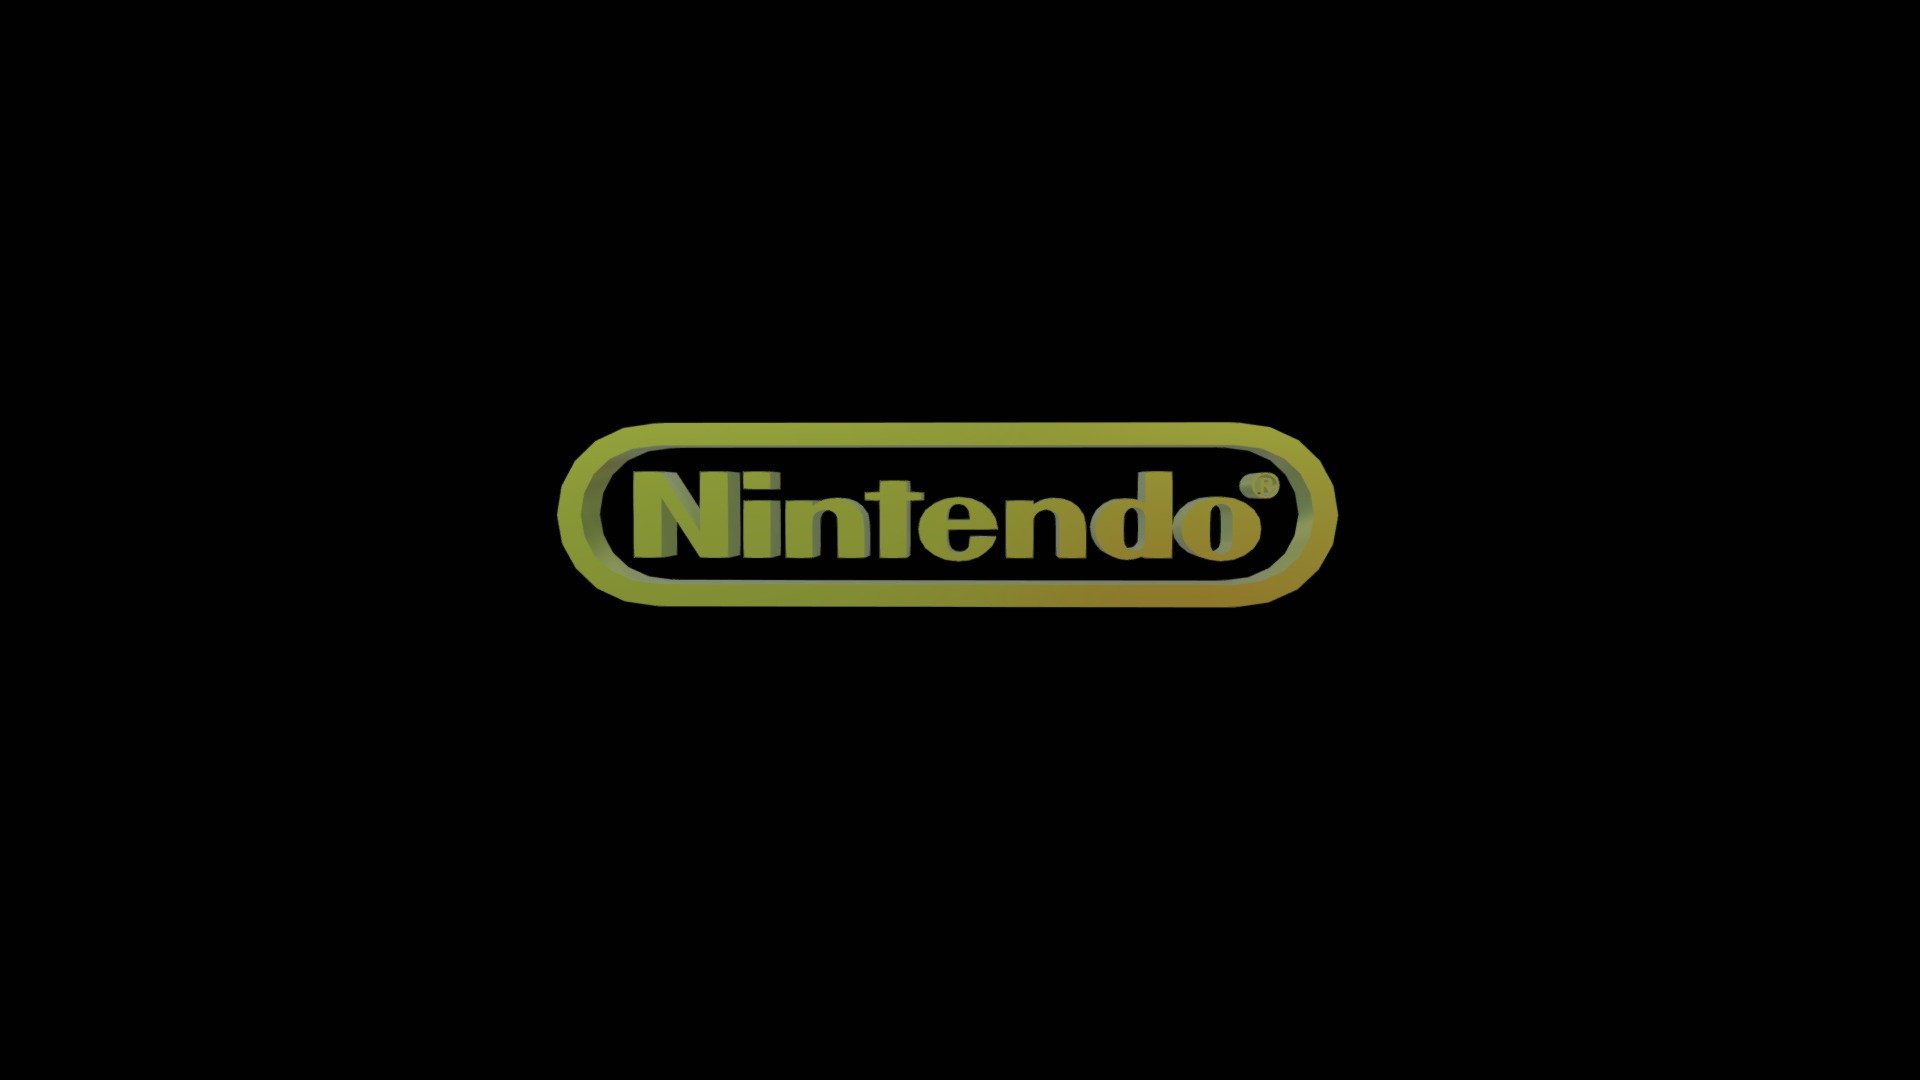 Ñ Intendo  Nintendo 3ds, Logos famosos, Nintendo